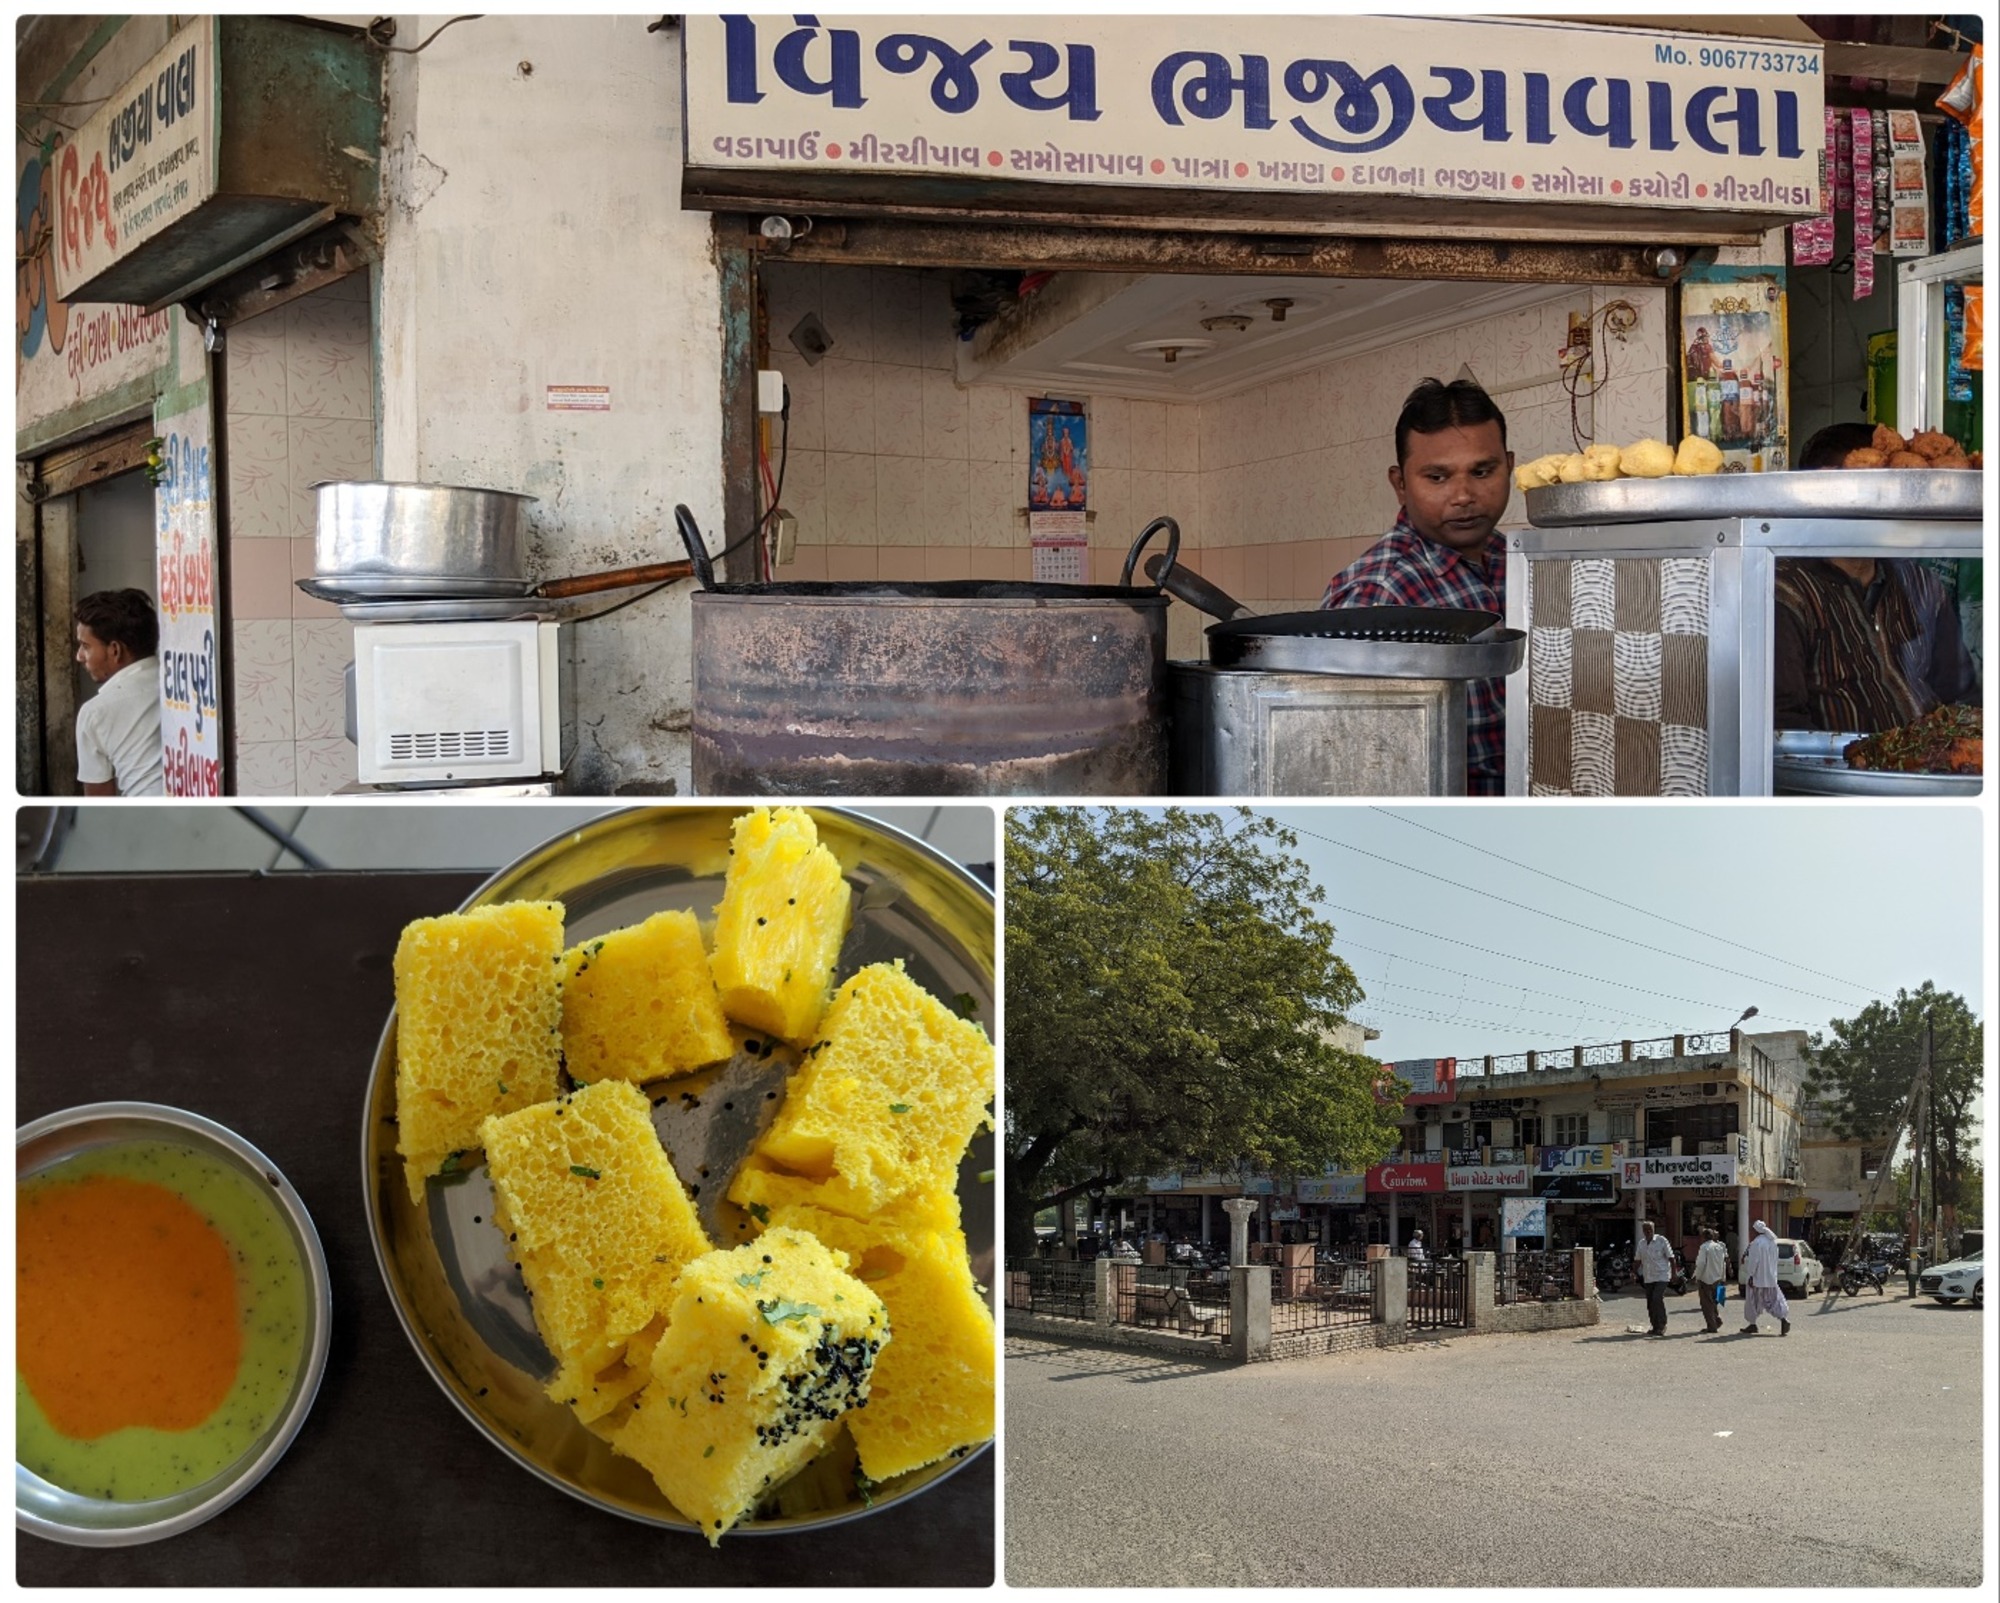 On the way, we stopped at New Anjar, Kutch for some tasty Dhokla at Vijay Bhajiawala selling Vadapav, Mirchipav, Samosapav and Khaman Dhokla